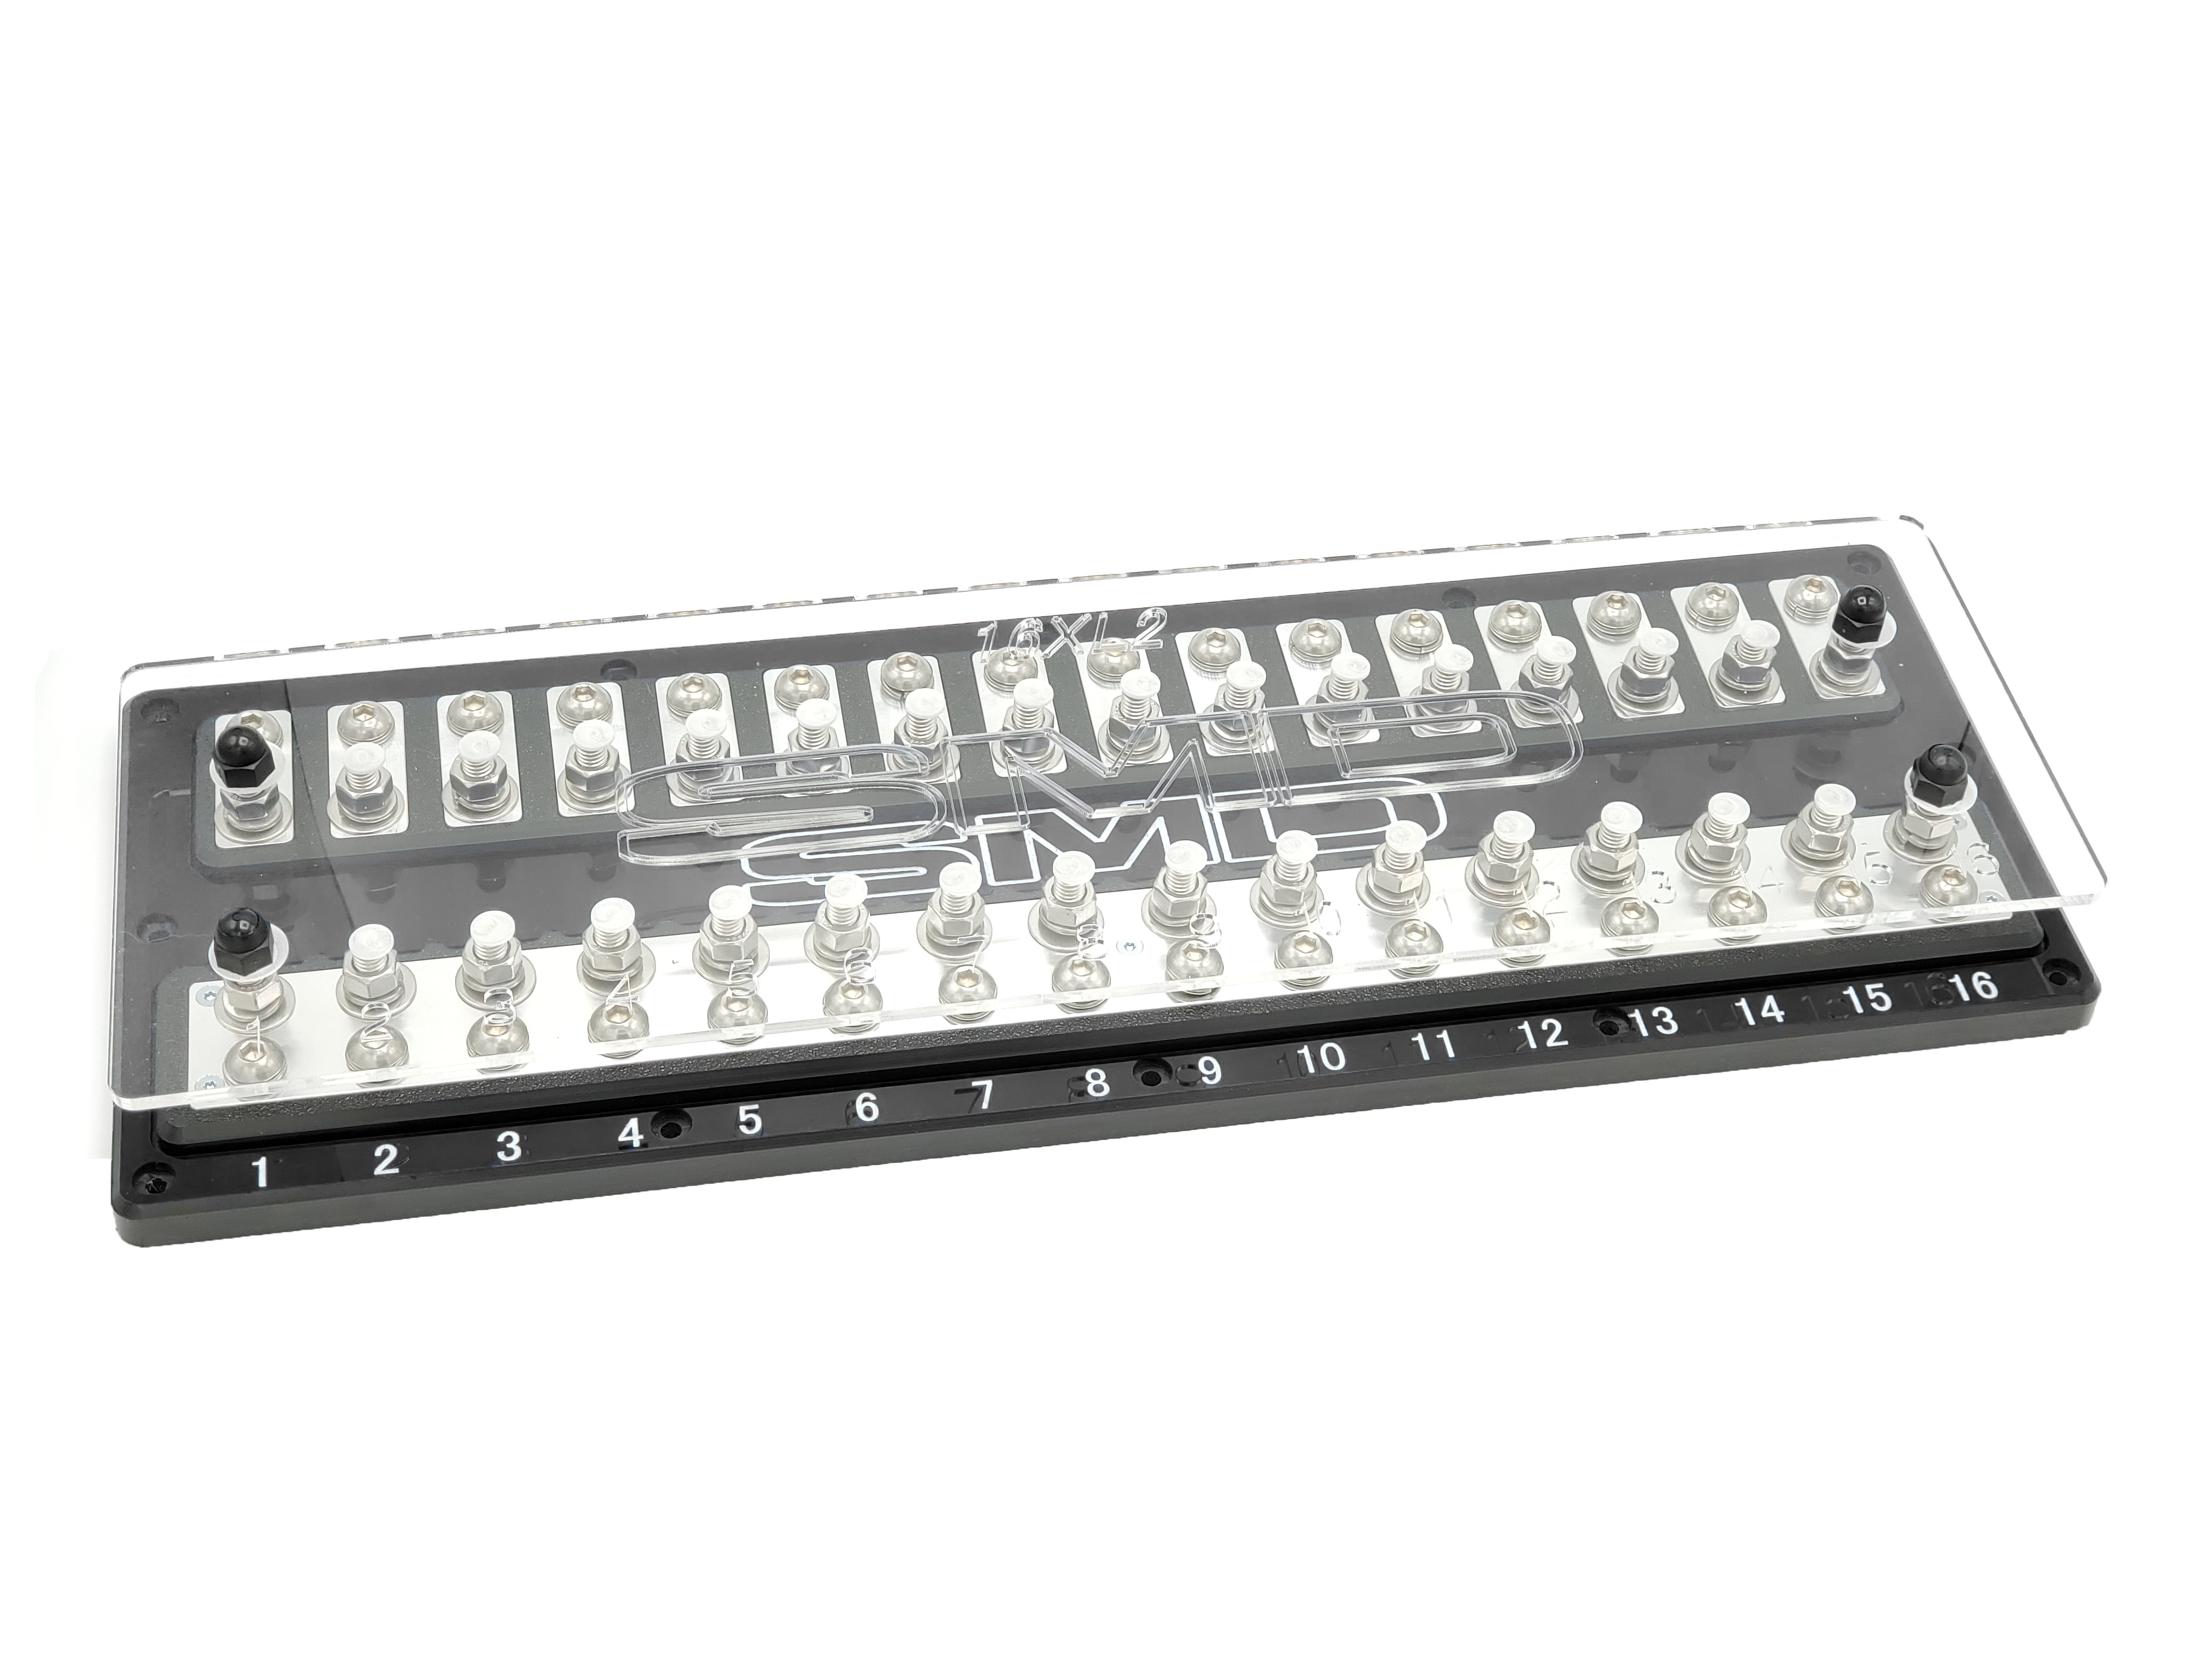 SMD XL2 Distribution Bar - 16-Slot ANL Fuse Block - Steve Meade Designs